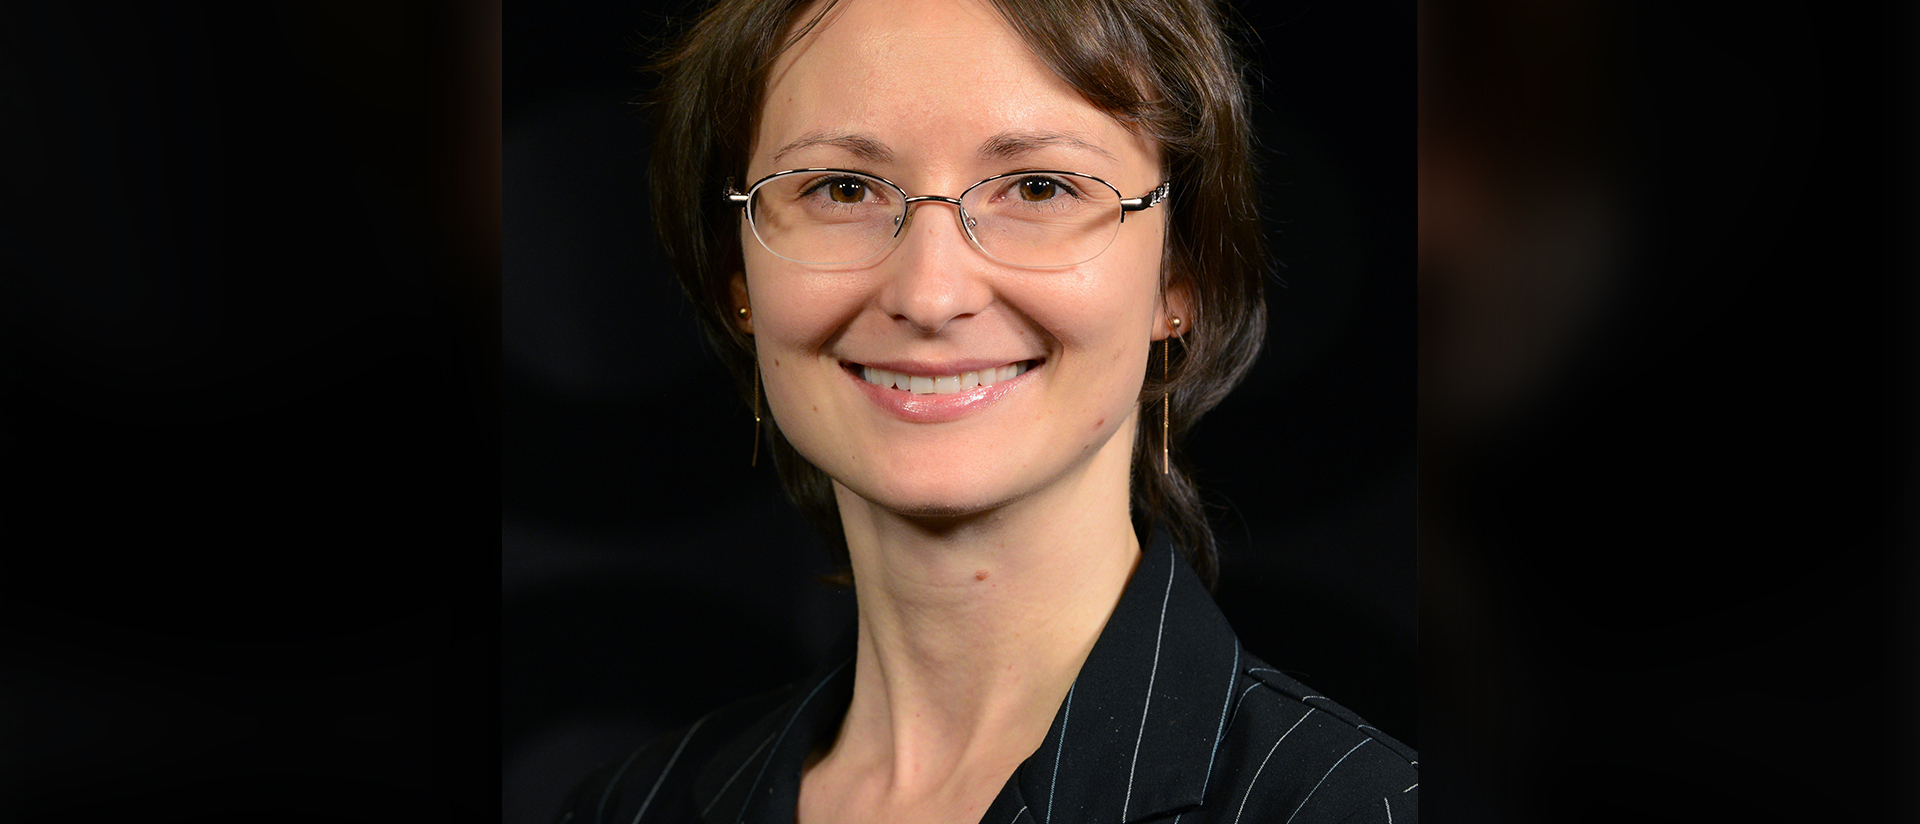 Victoria Udalova, '07 economics